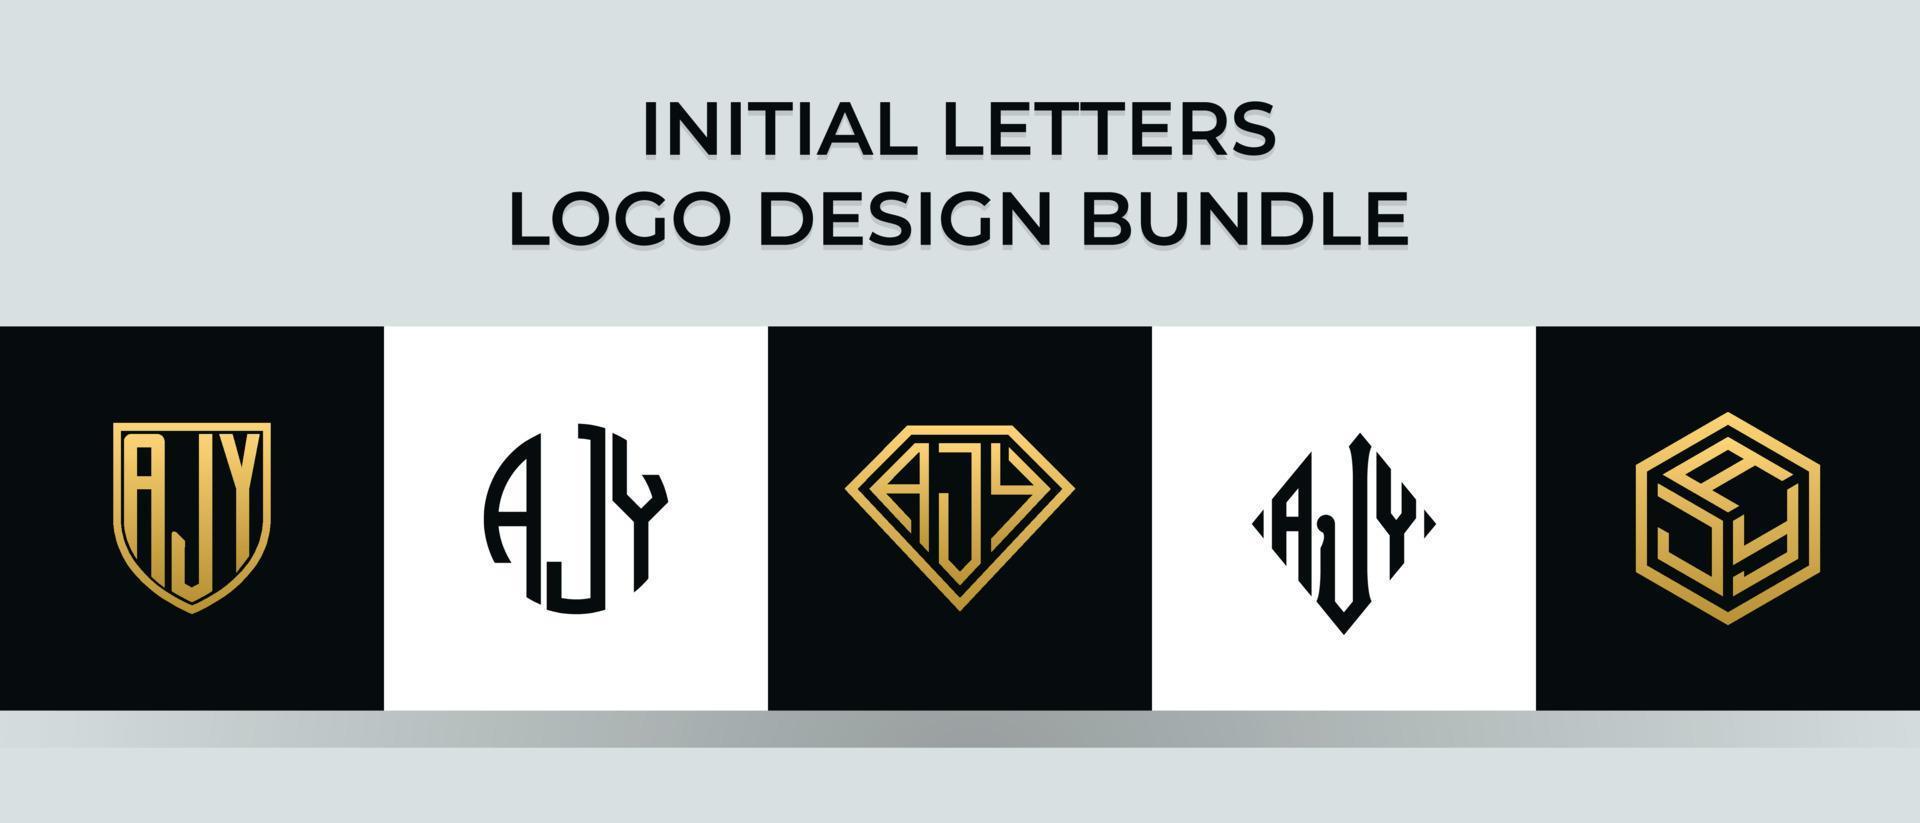 Initial letters AJY logo designs Bundle vector